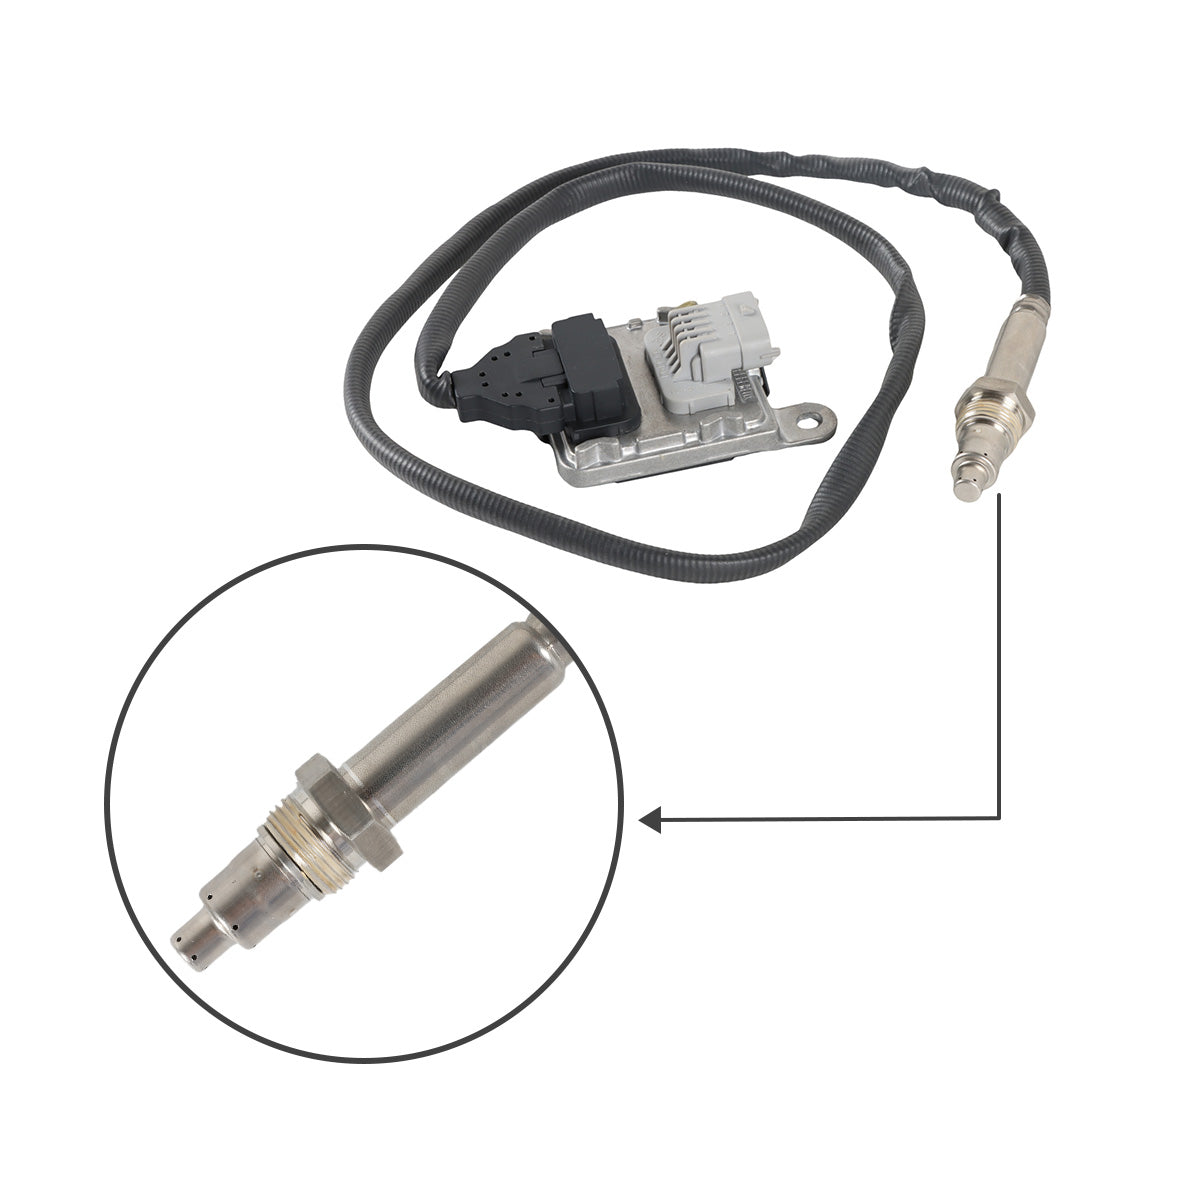 22303390 21479638 21567764 Inlet Nox Sensor for Volvo Mack Part MP8 D11 D13 D16 - Sinocmp